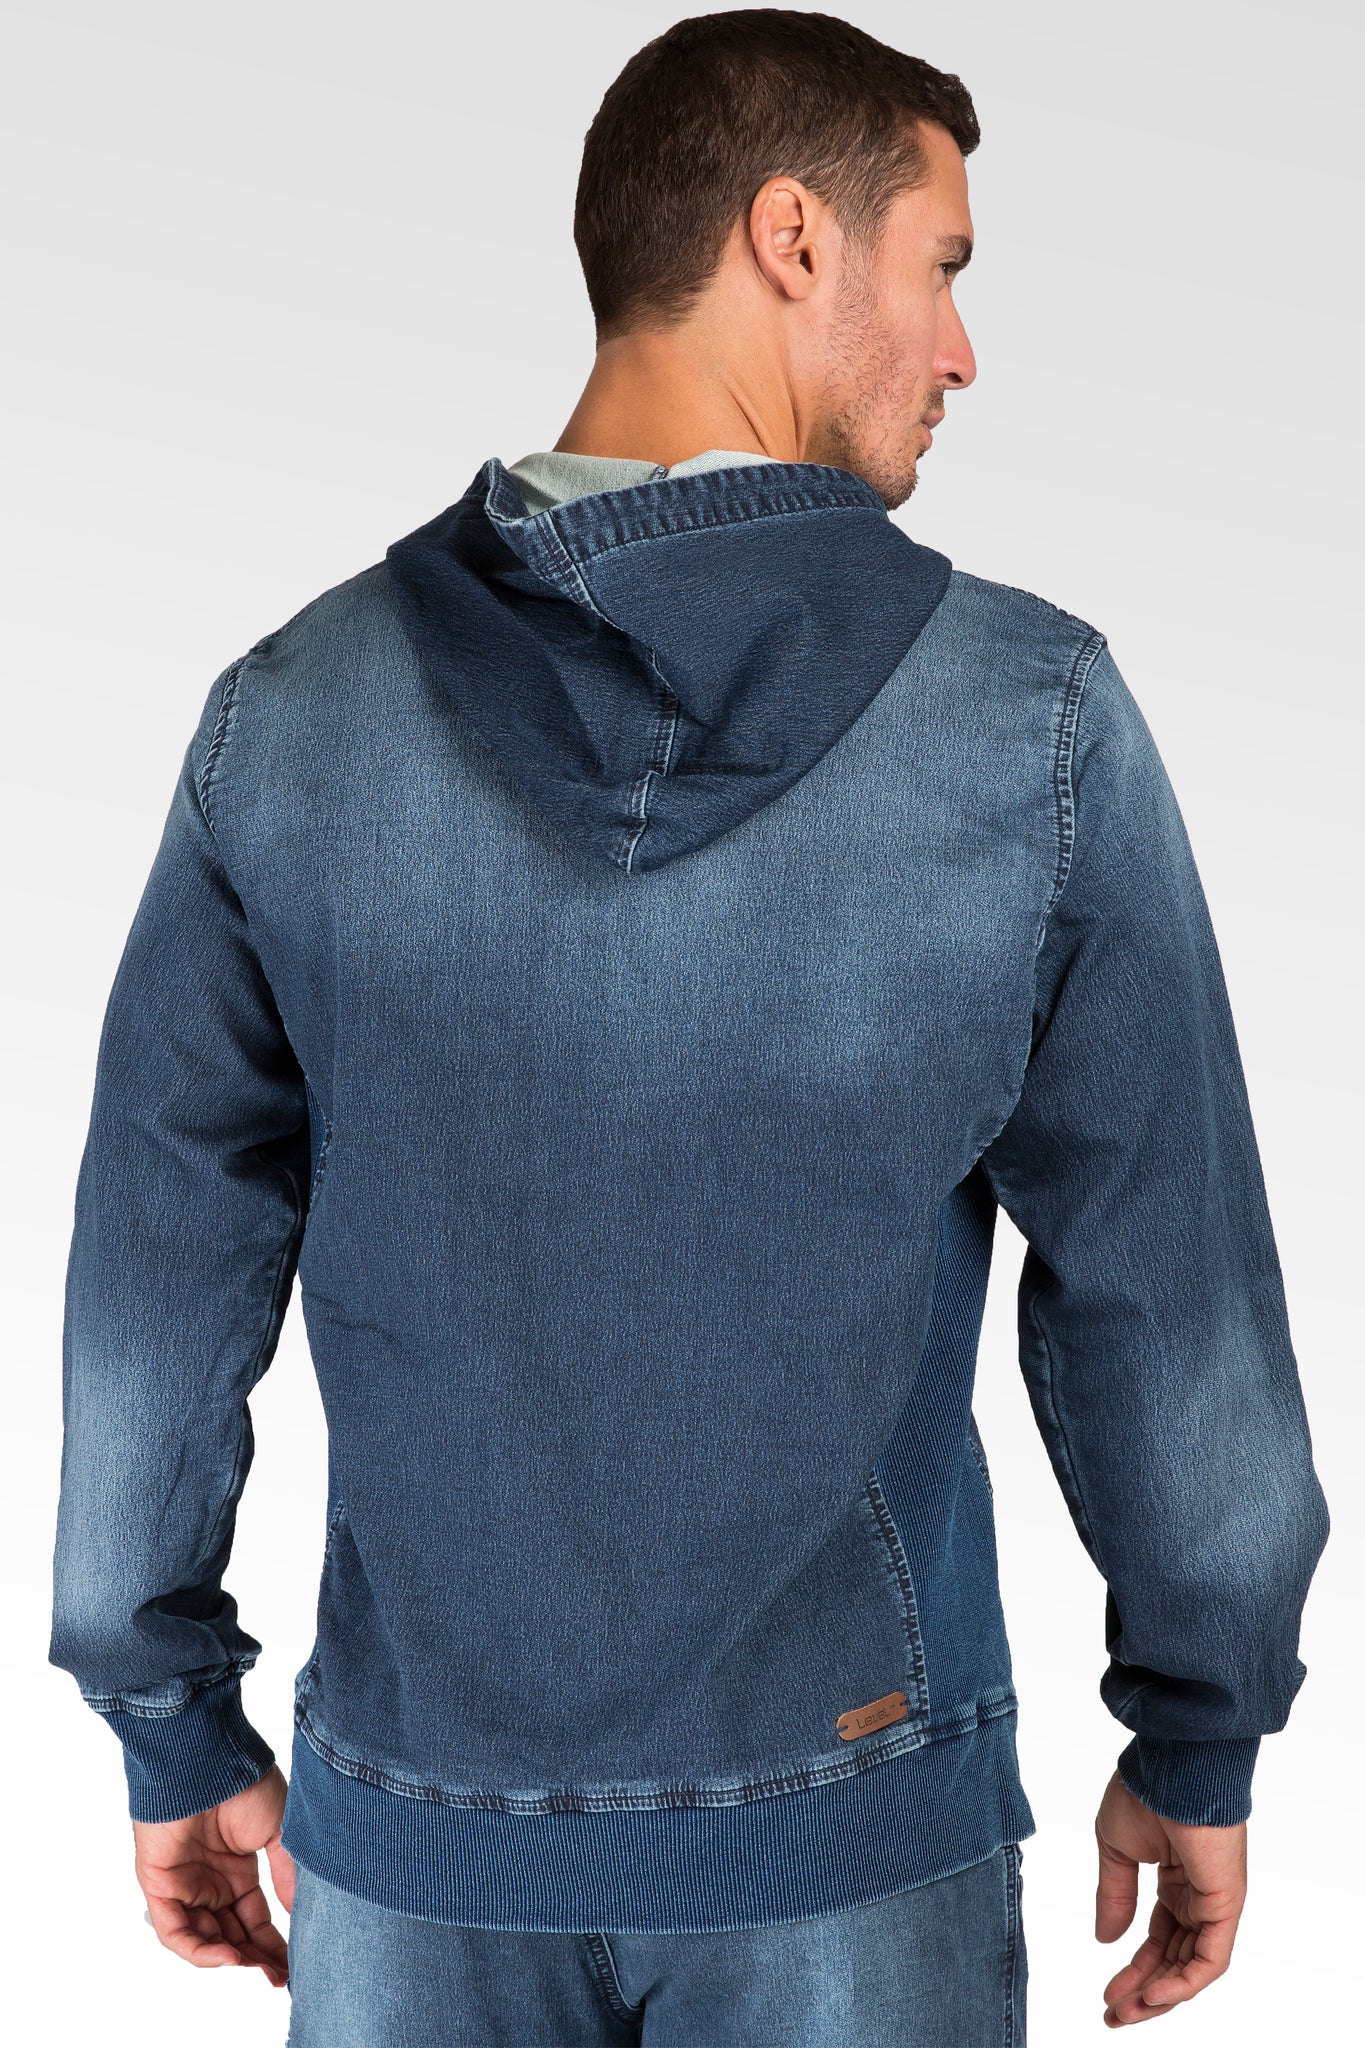 Knit Denim Pullover Vintage Hoody Shirts Side Rib Insert Rough Rugged